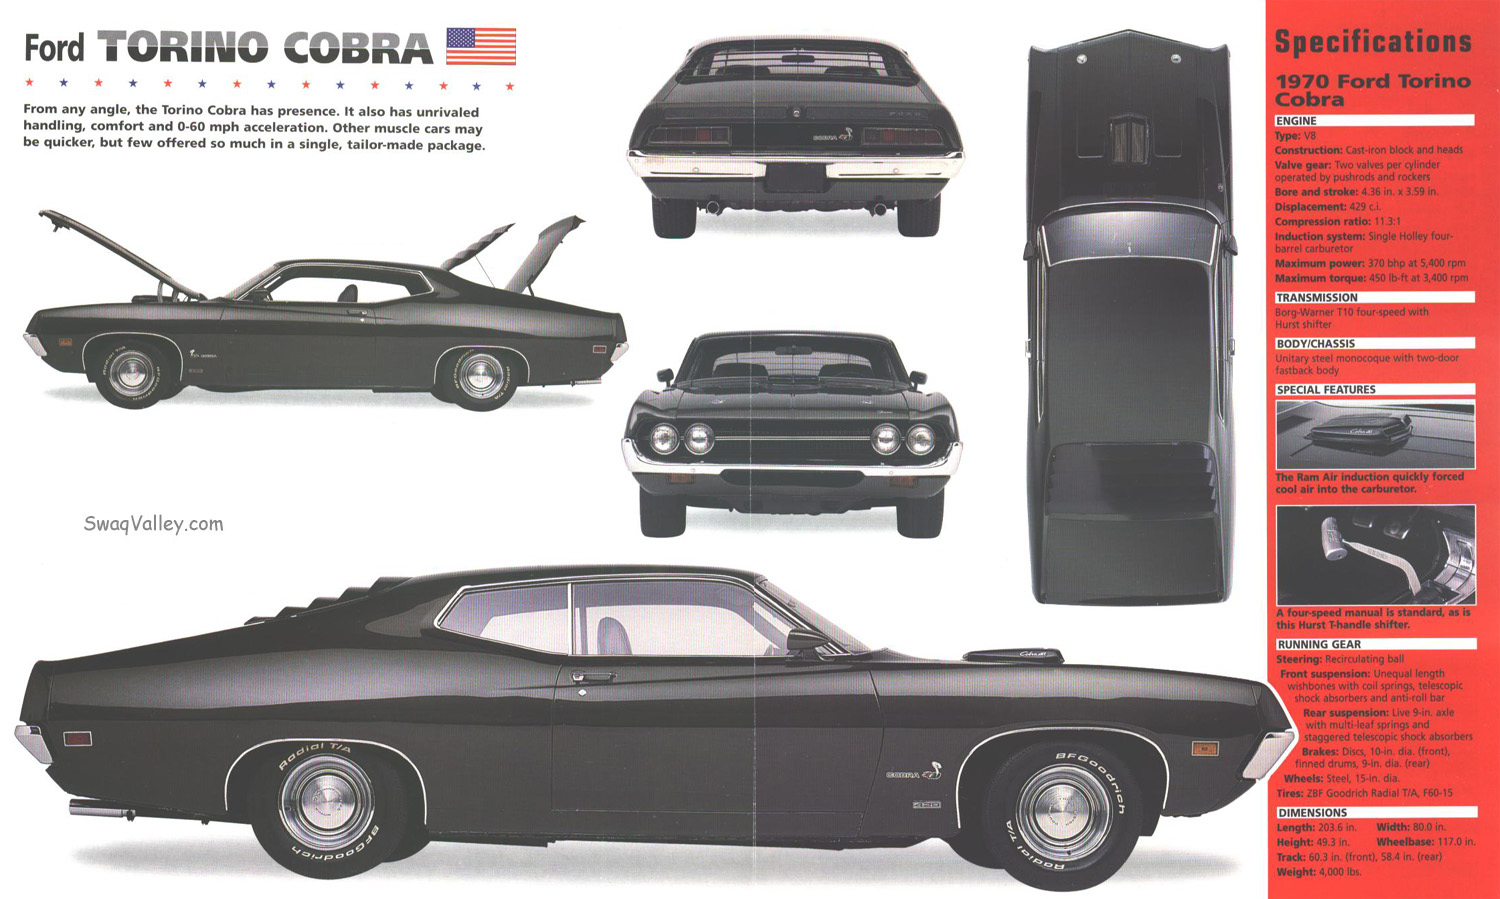 Ford Torino Cobra #15